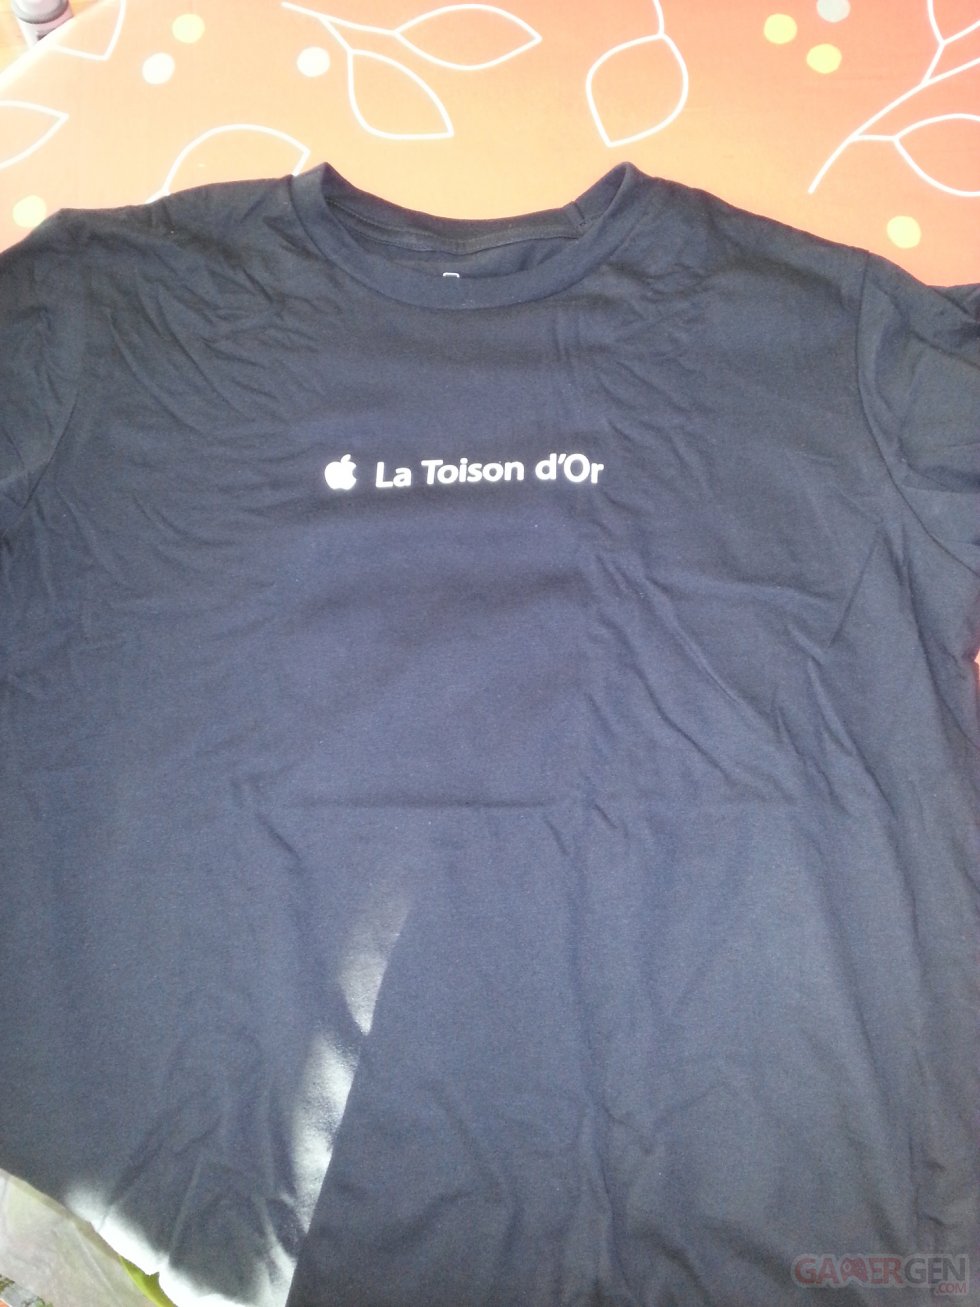 Dijon Apple 6